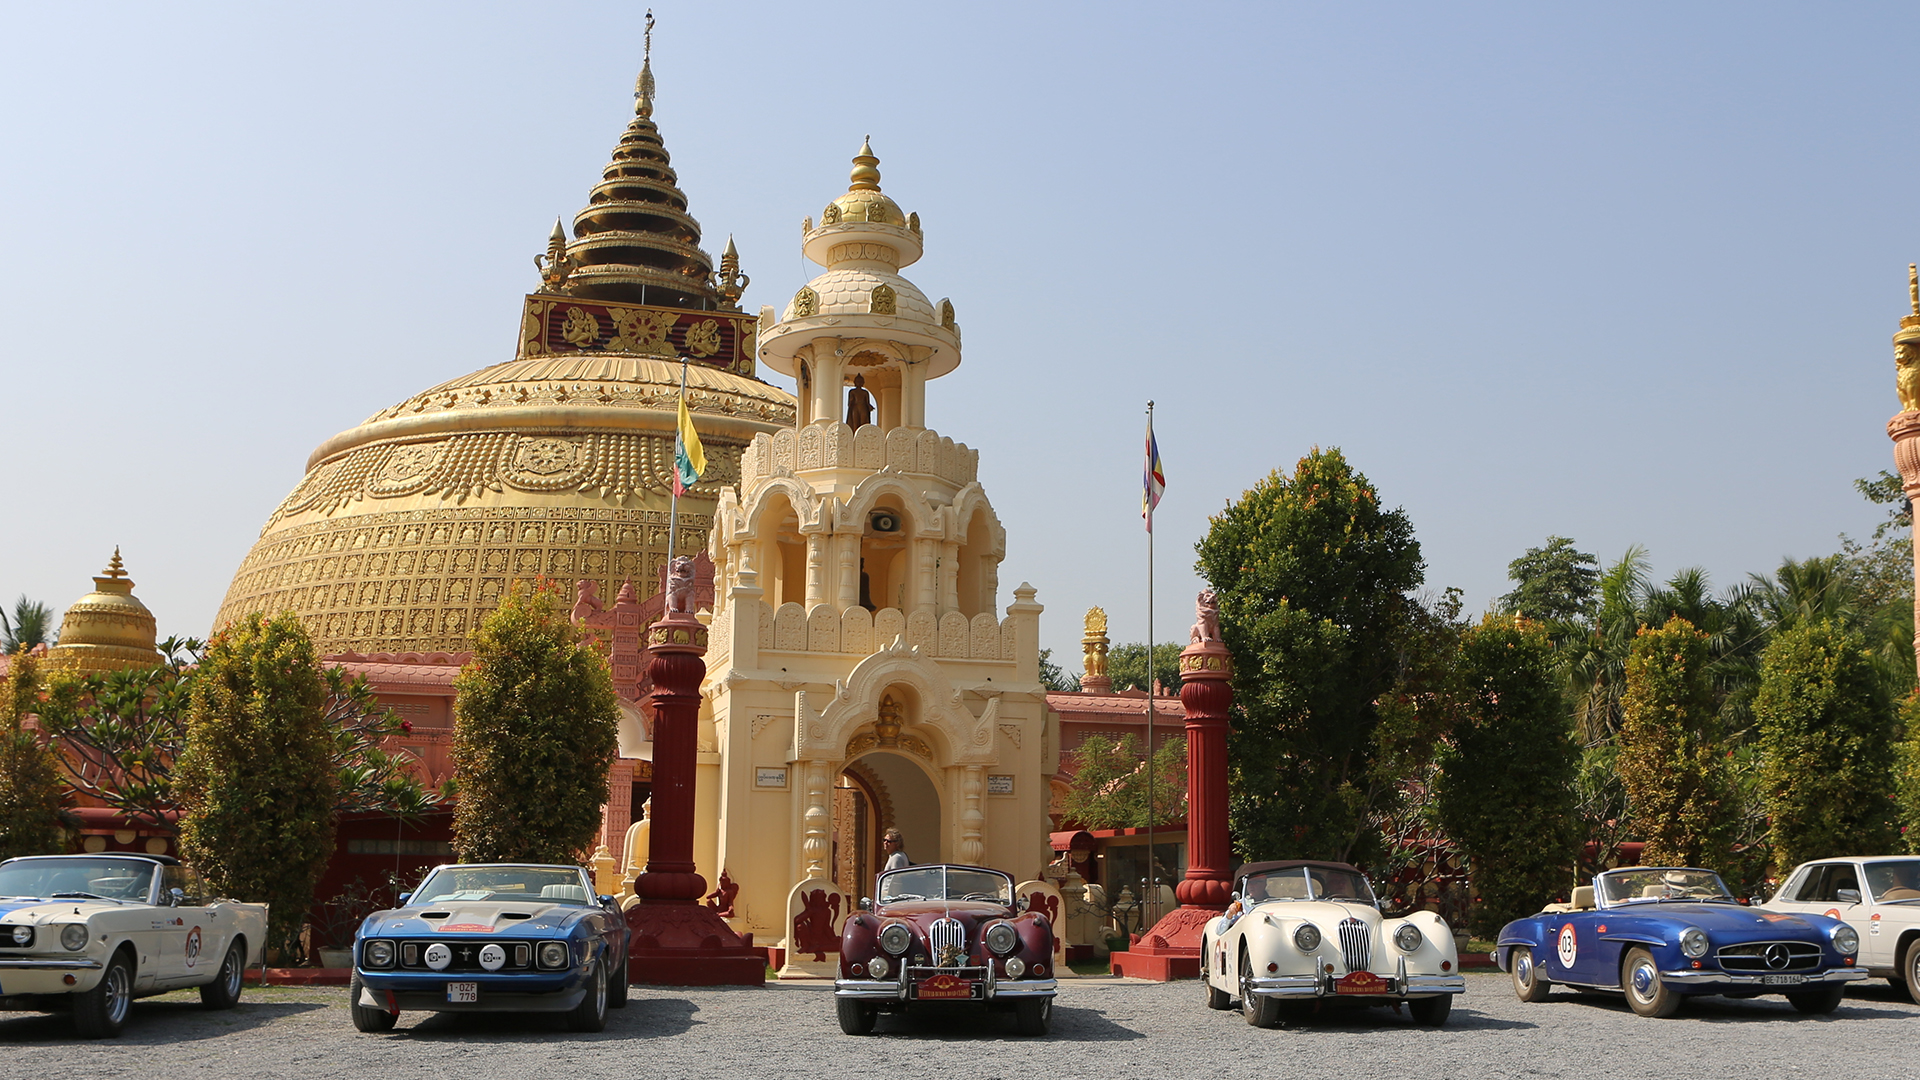 The Burma road classic 2015